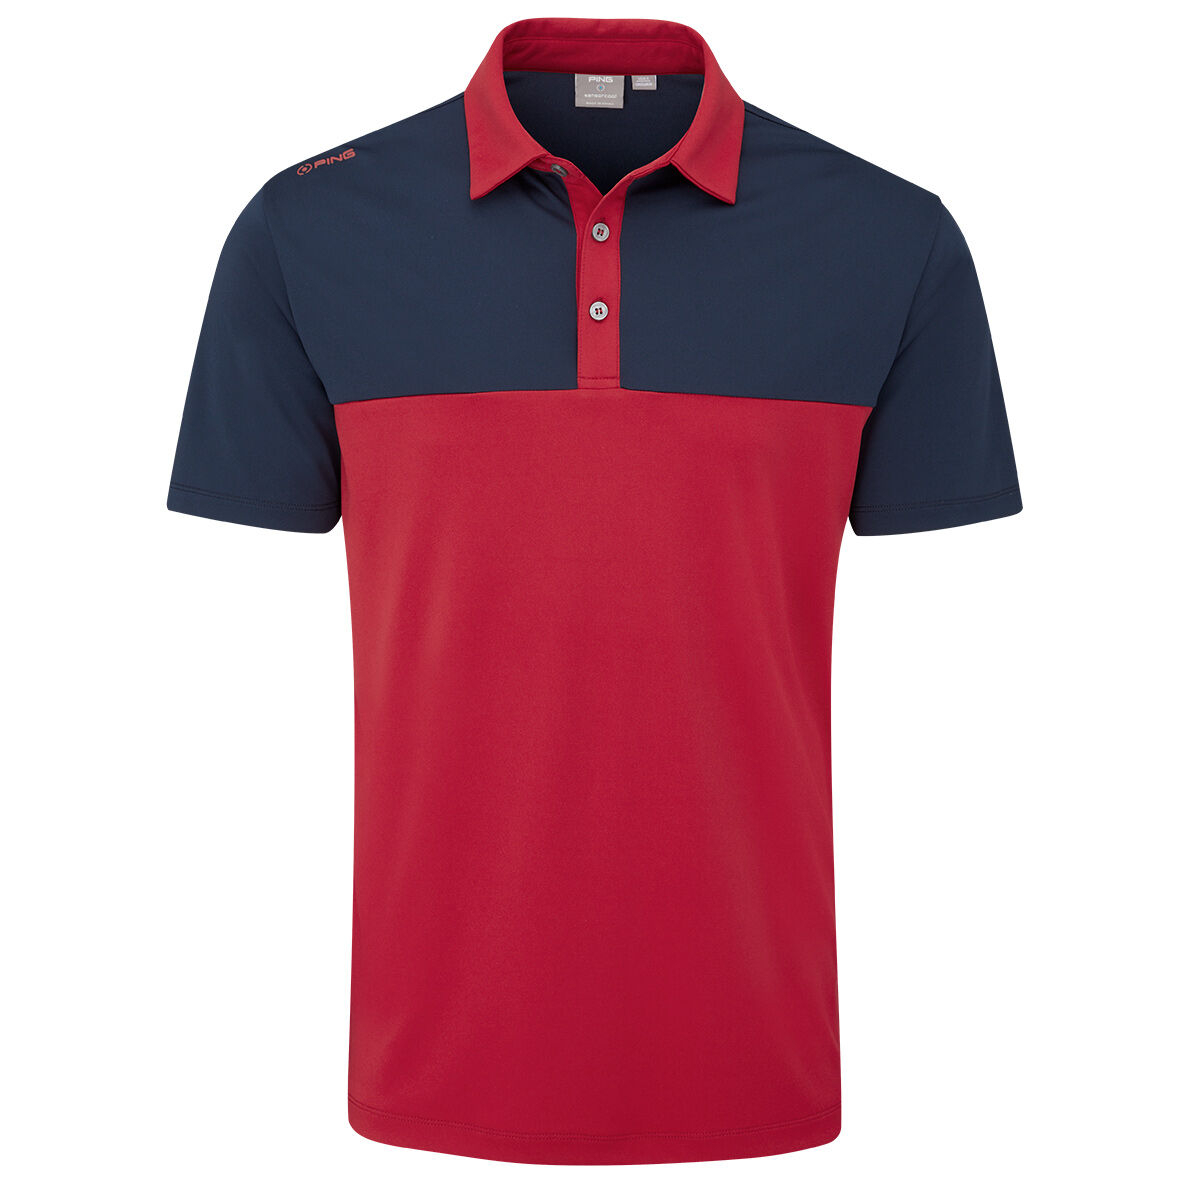 PING Men’s Bodi Panel Golf Polo Shirt, Mens, Rich red/navy, Medium | American Golf